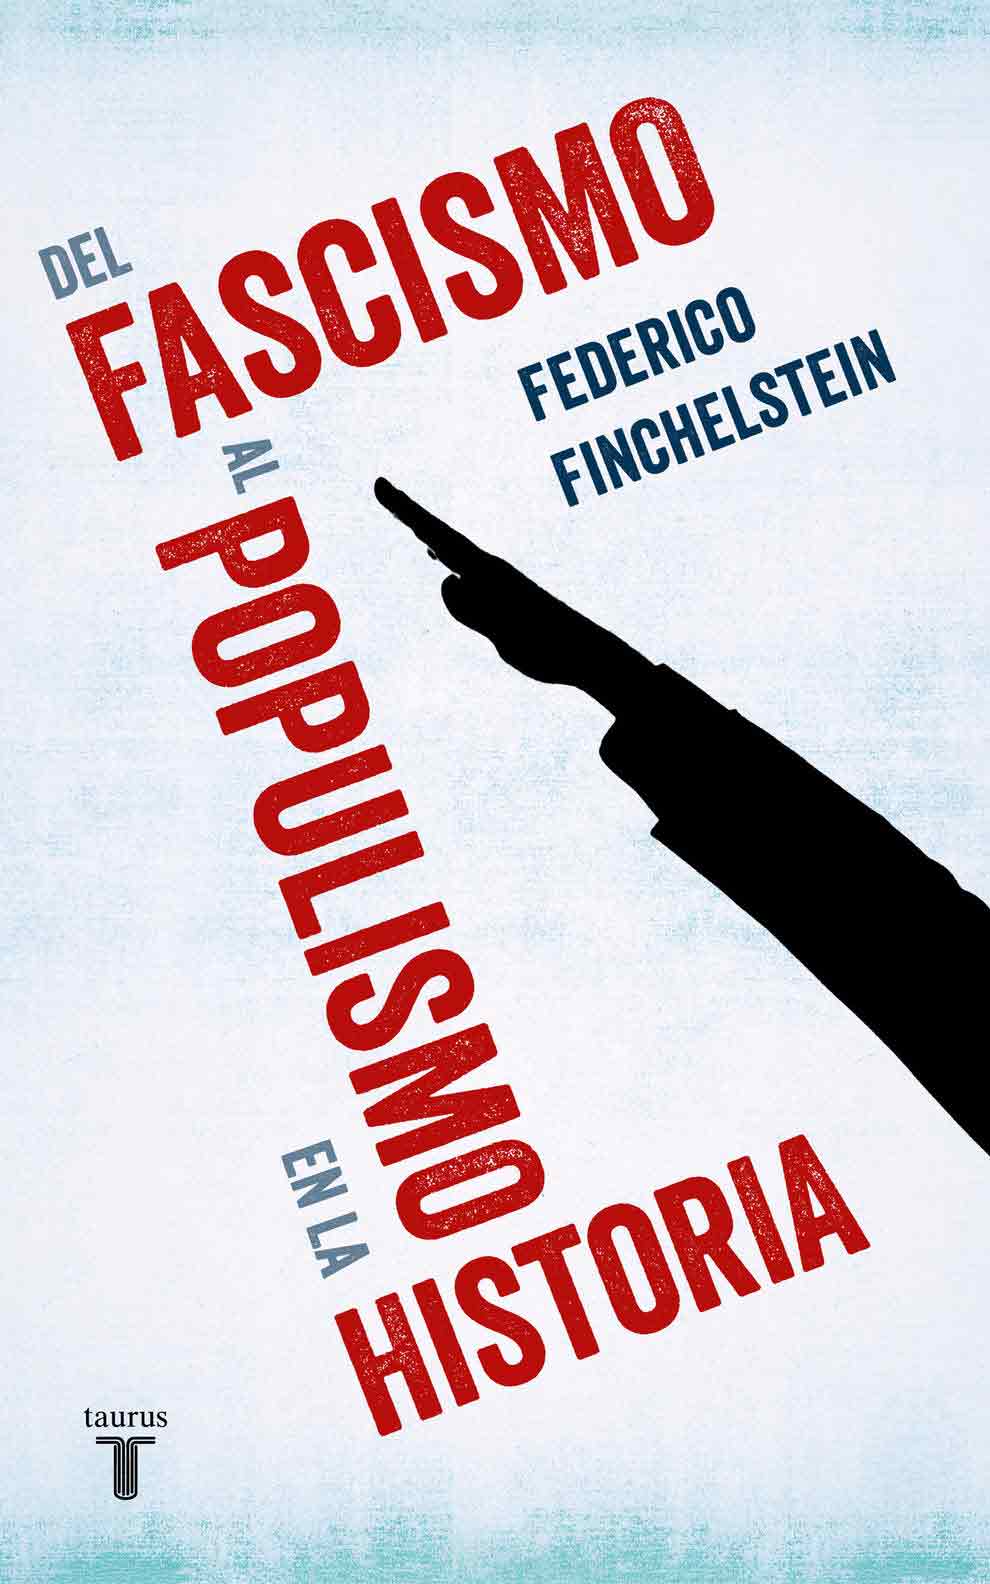 Federico Finchelstein: “Vox y Podemos no son homologables” 3